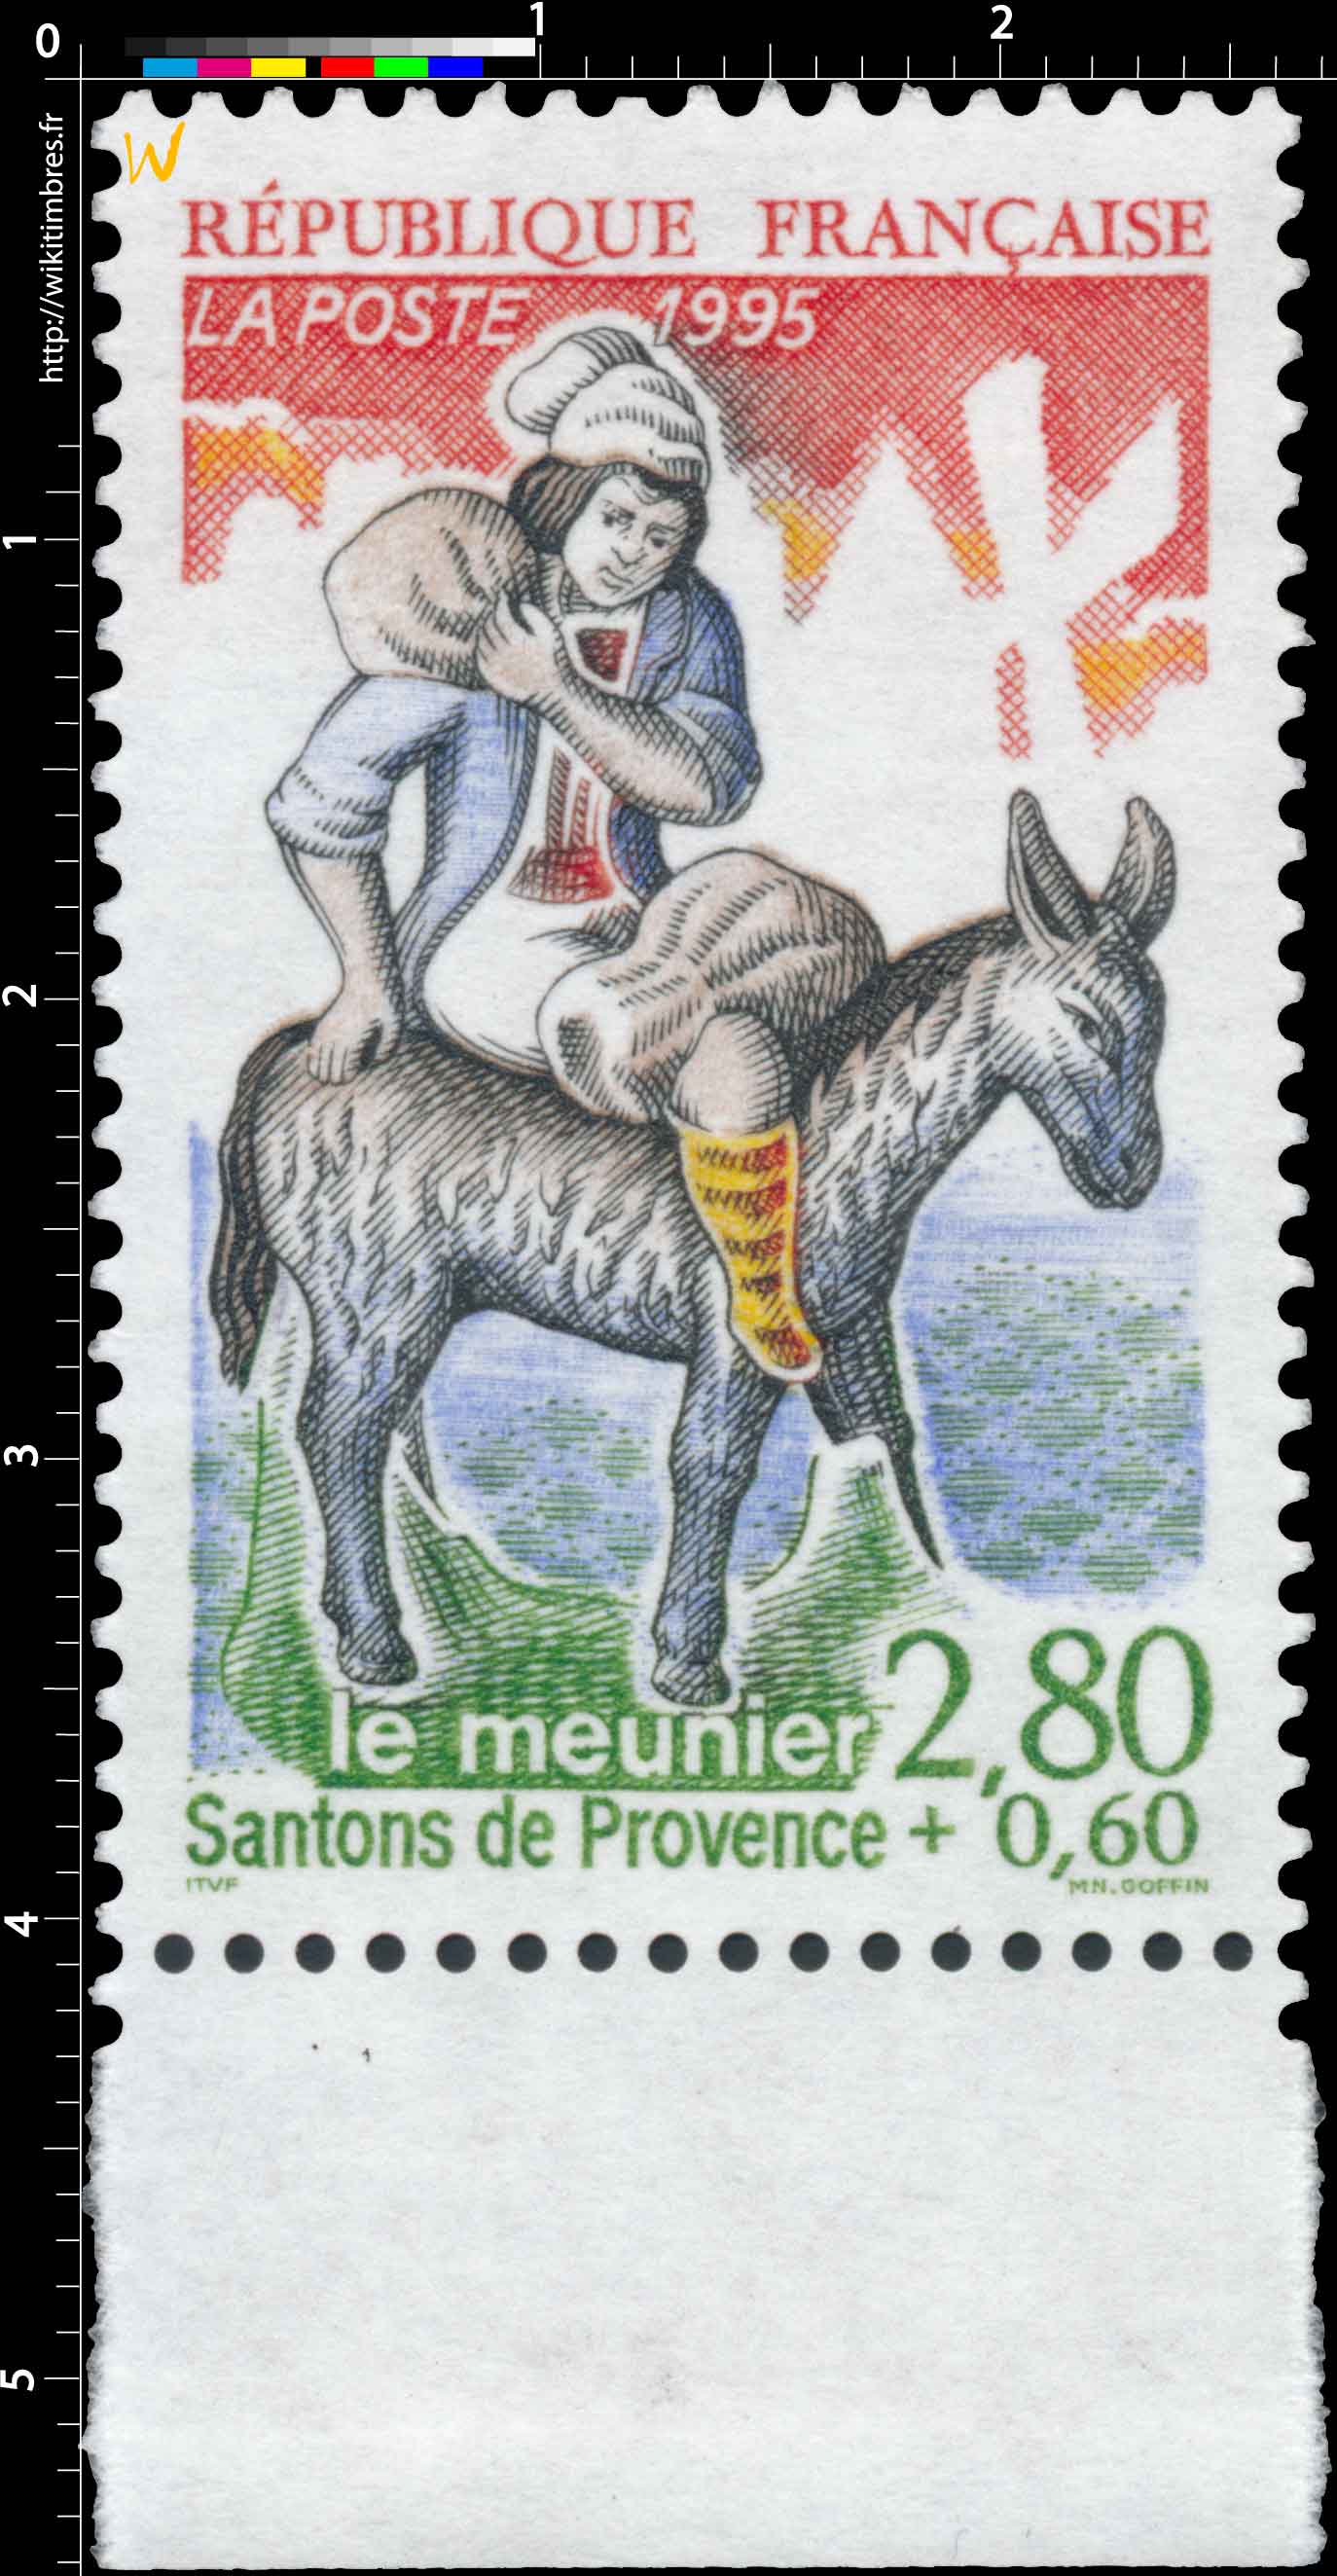 1995 Santons de Provence le meunier